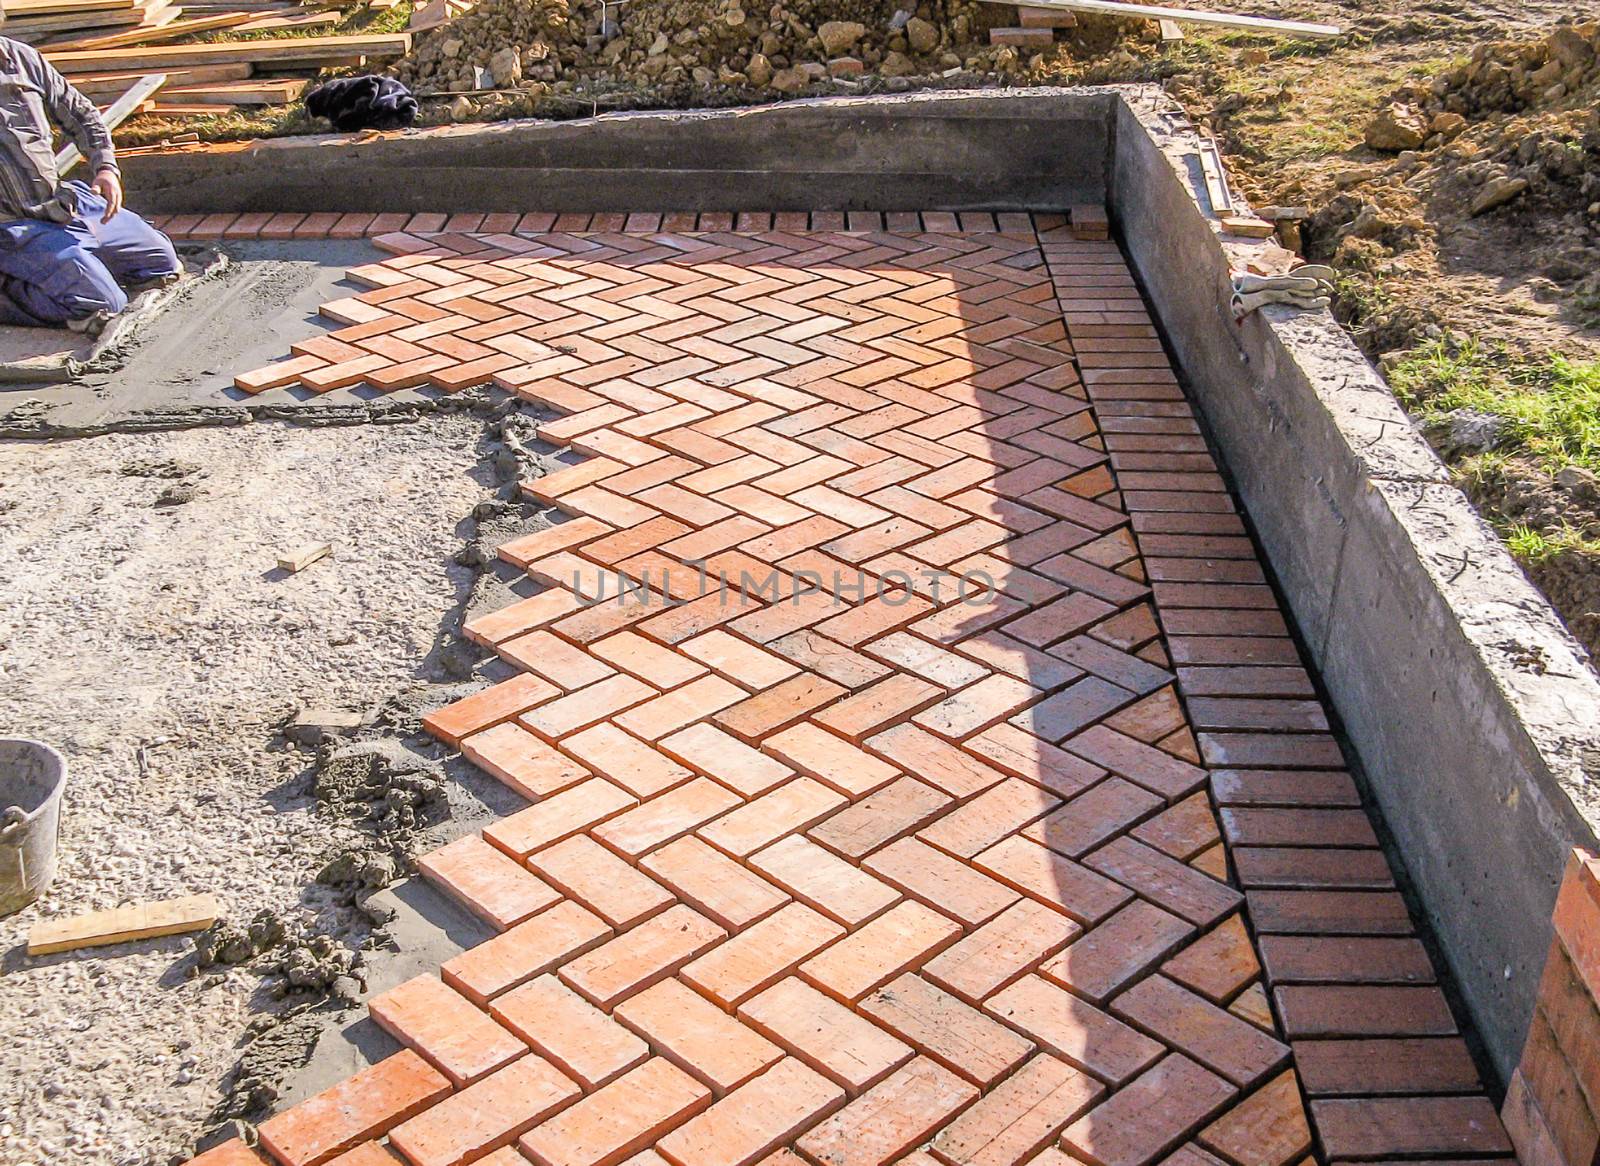 Orange brick paving stones in construction process by doble.d